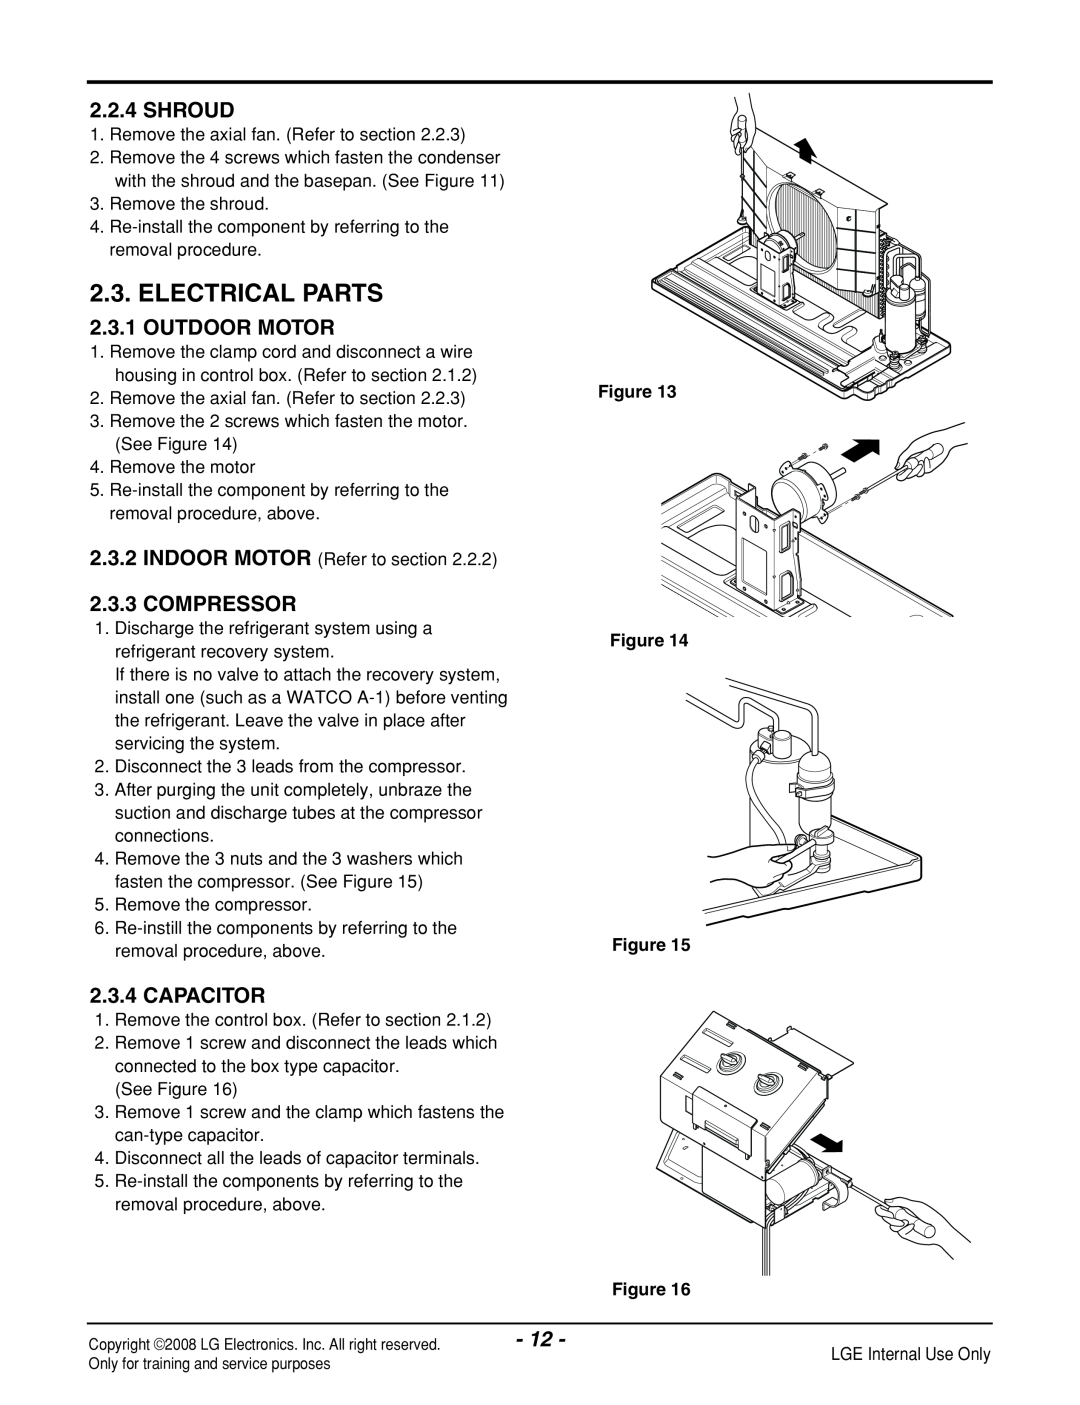 LG Electronics LP121CEM-Y8 manual Electrical Parts, Shroud, Outdoor Motor, Compressor, Capacitor 